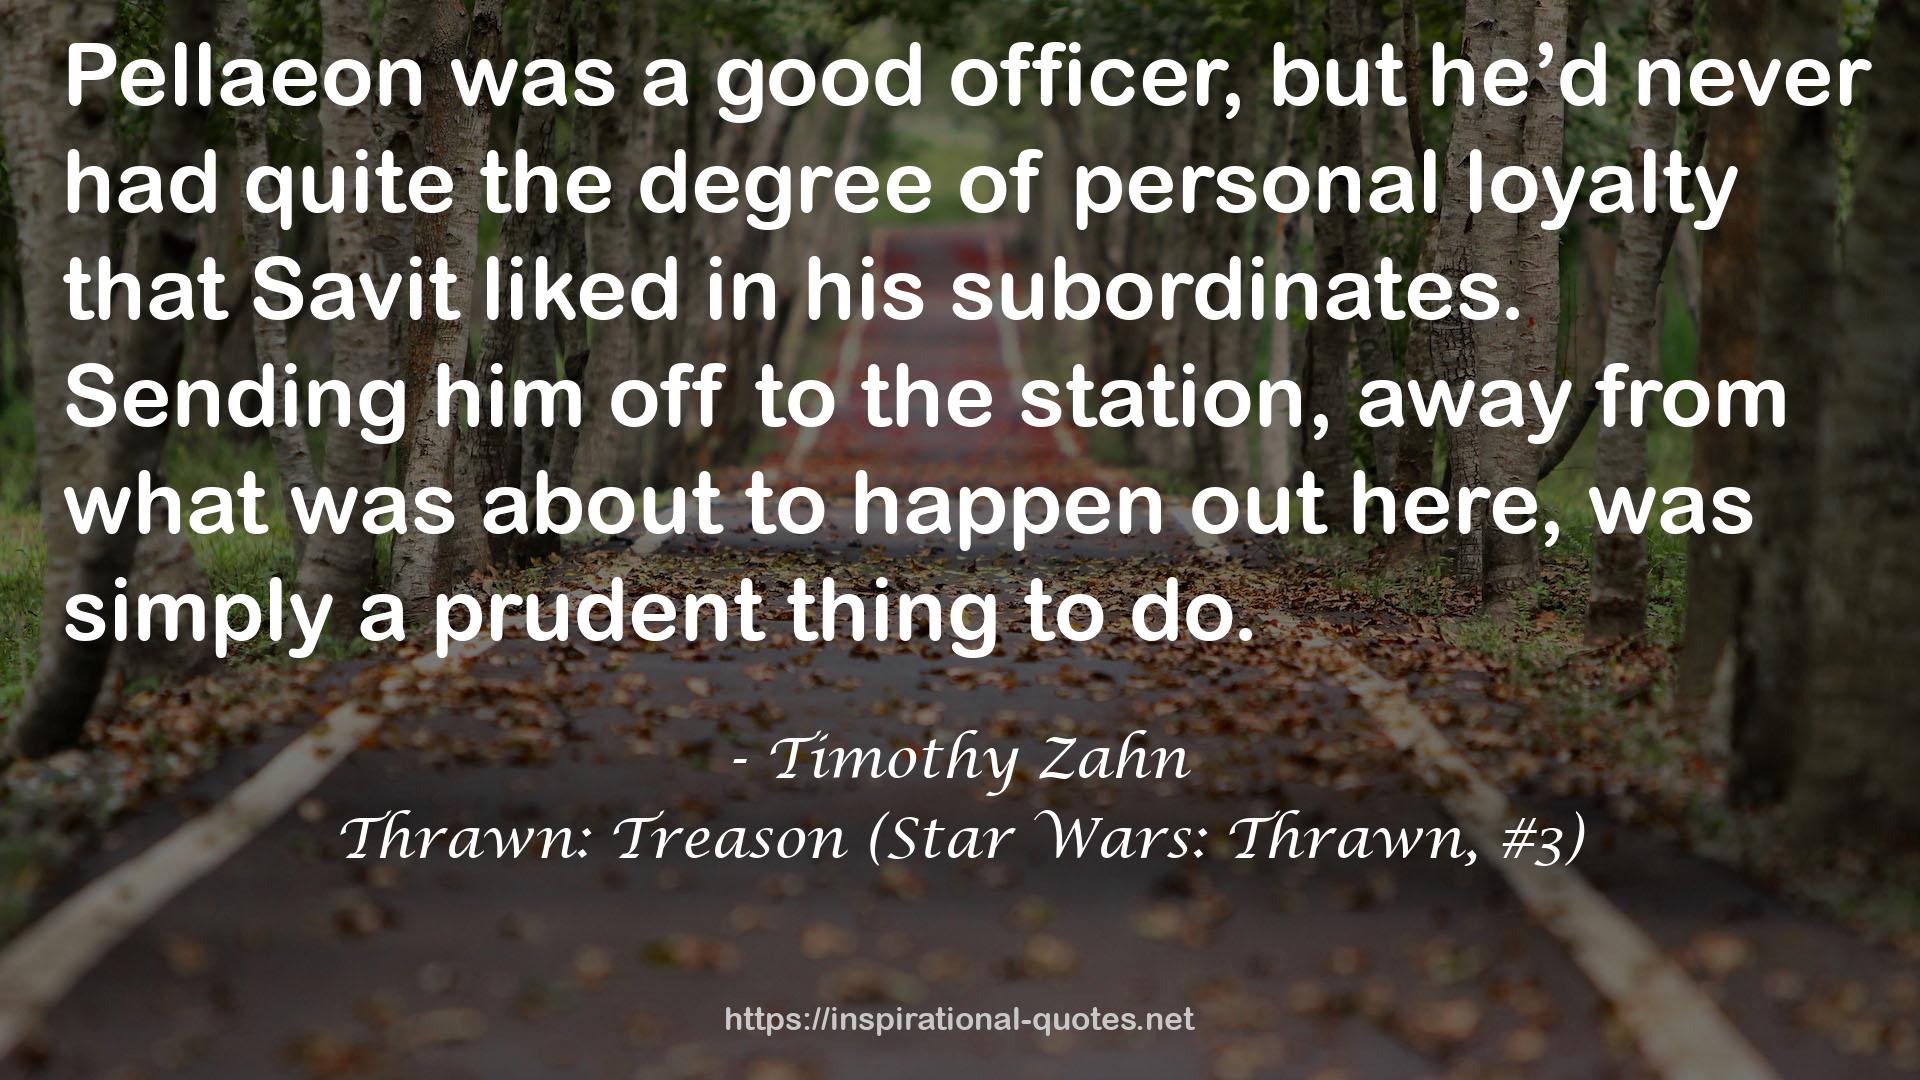 Thrawn: Treason (Star Wars: Thrawn, #3) QUOTES